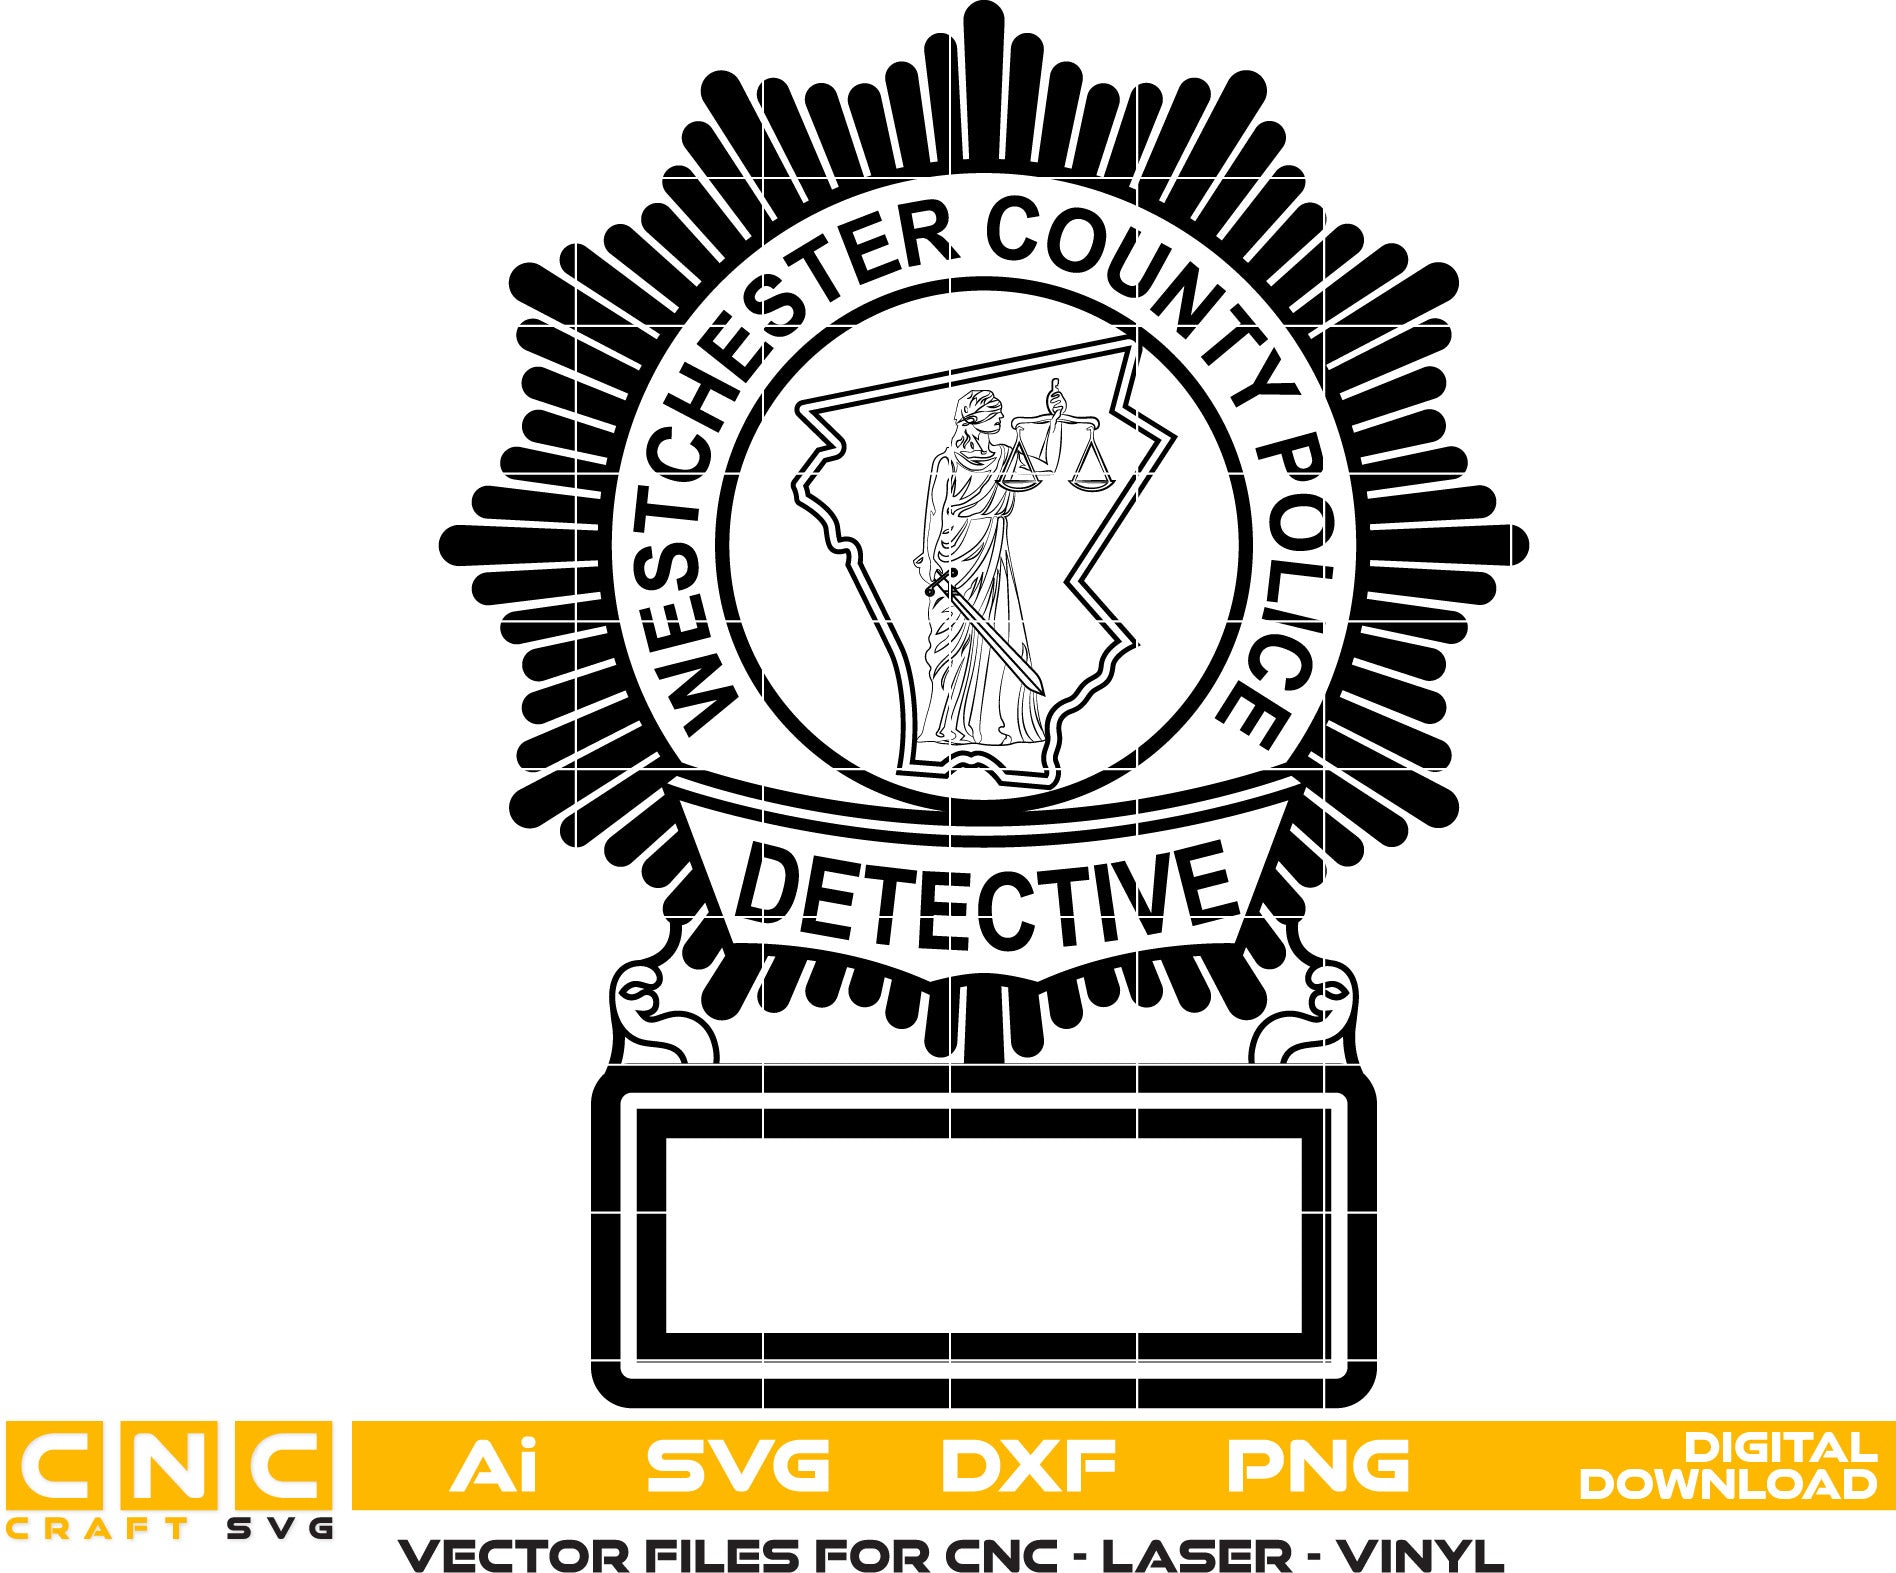 Westchester county Detective Police Badge vector art